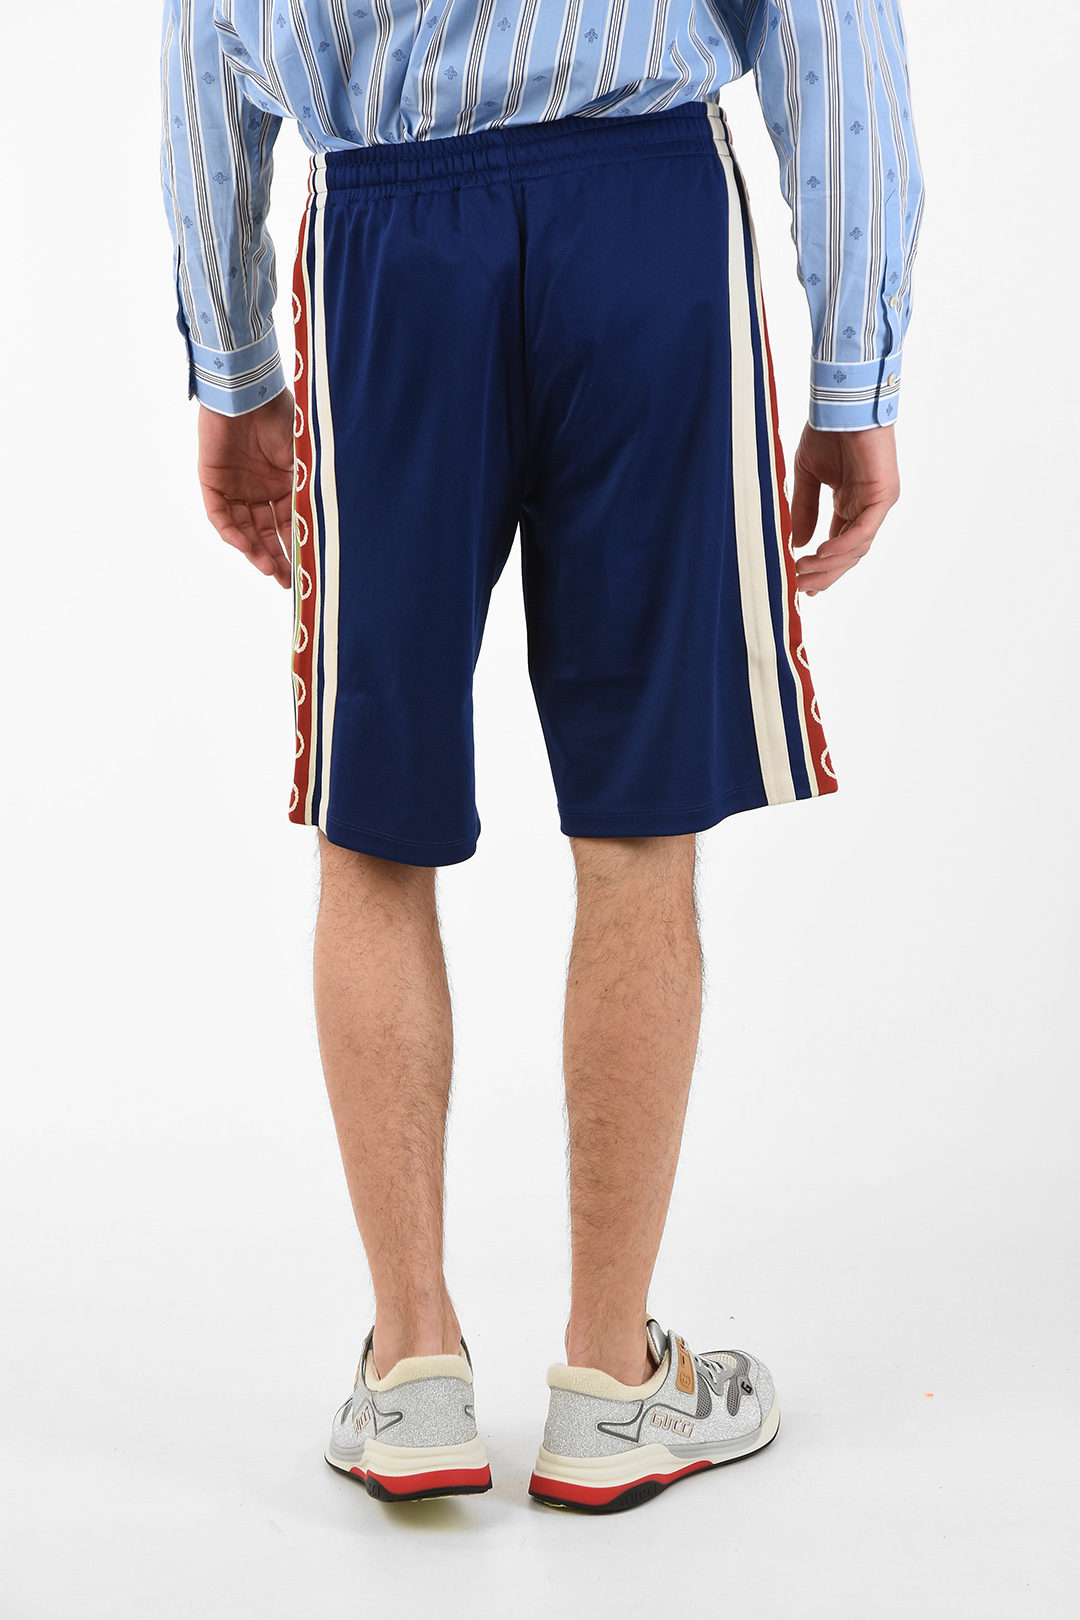 gucci logo shorts